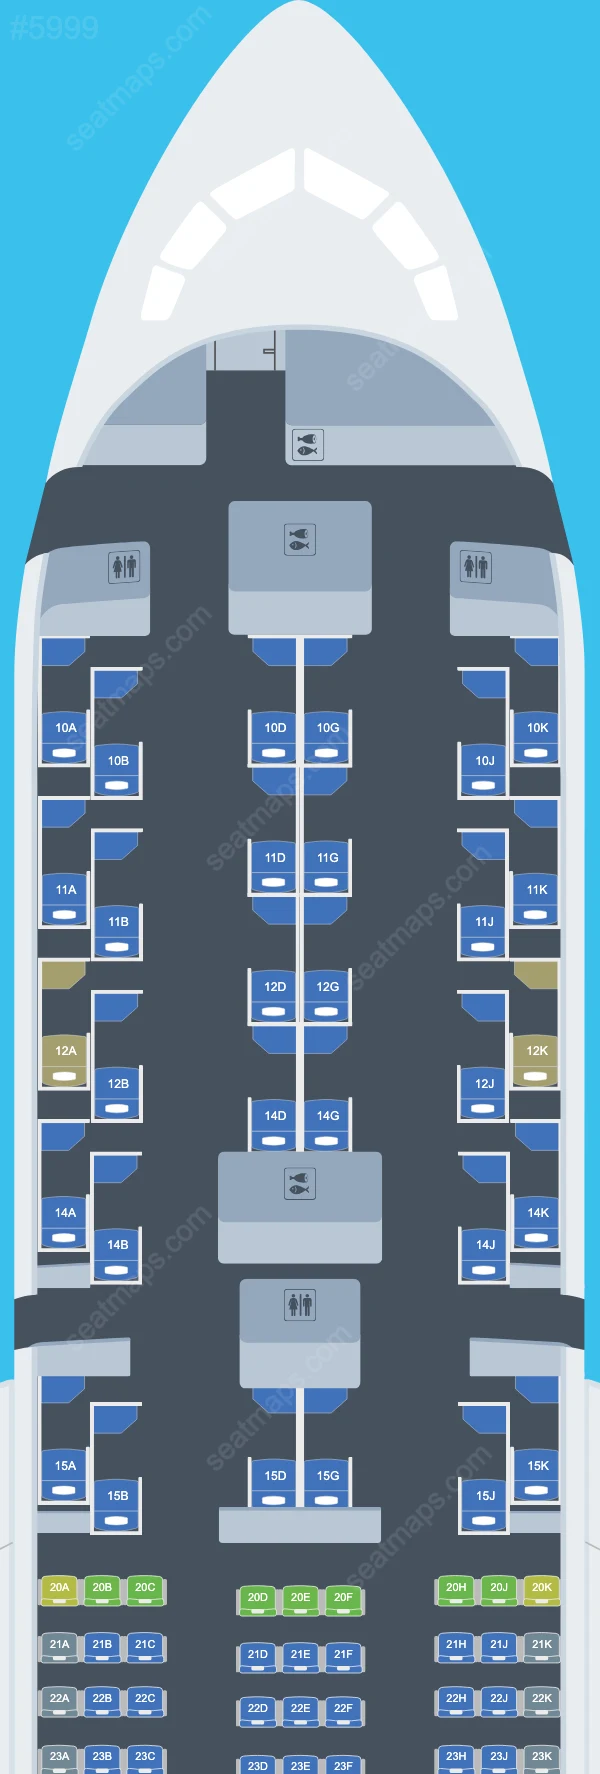 Oman Air Boeing 787 シートマップ 787-9 V.1